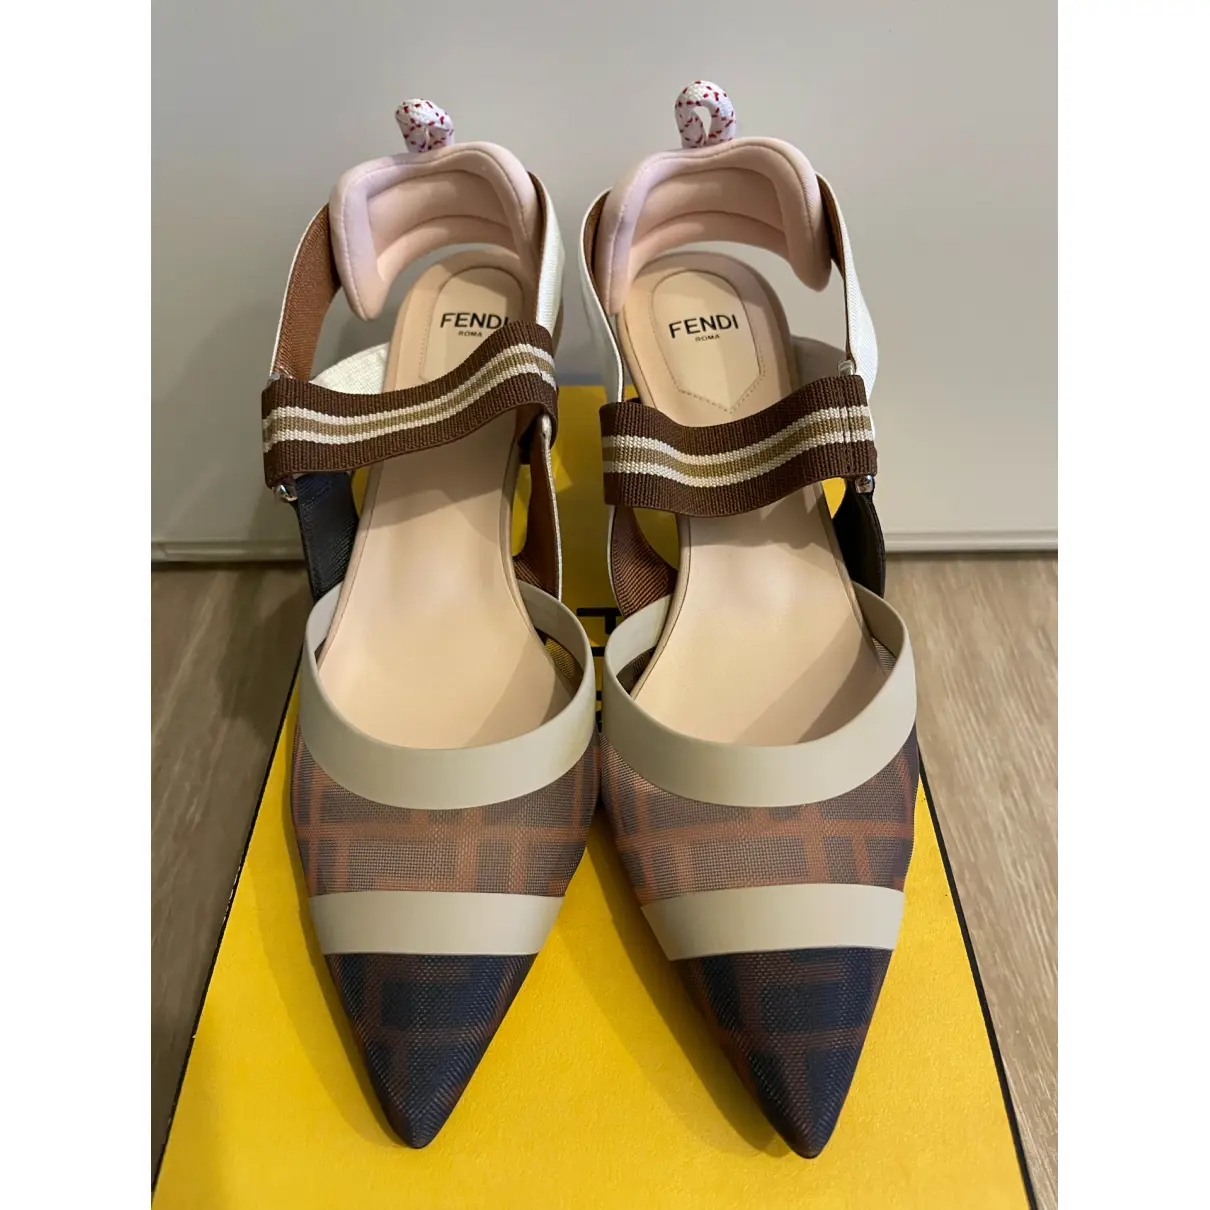 Buy Fendi Colibri sandal online